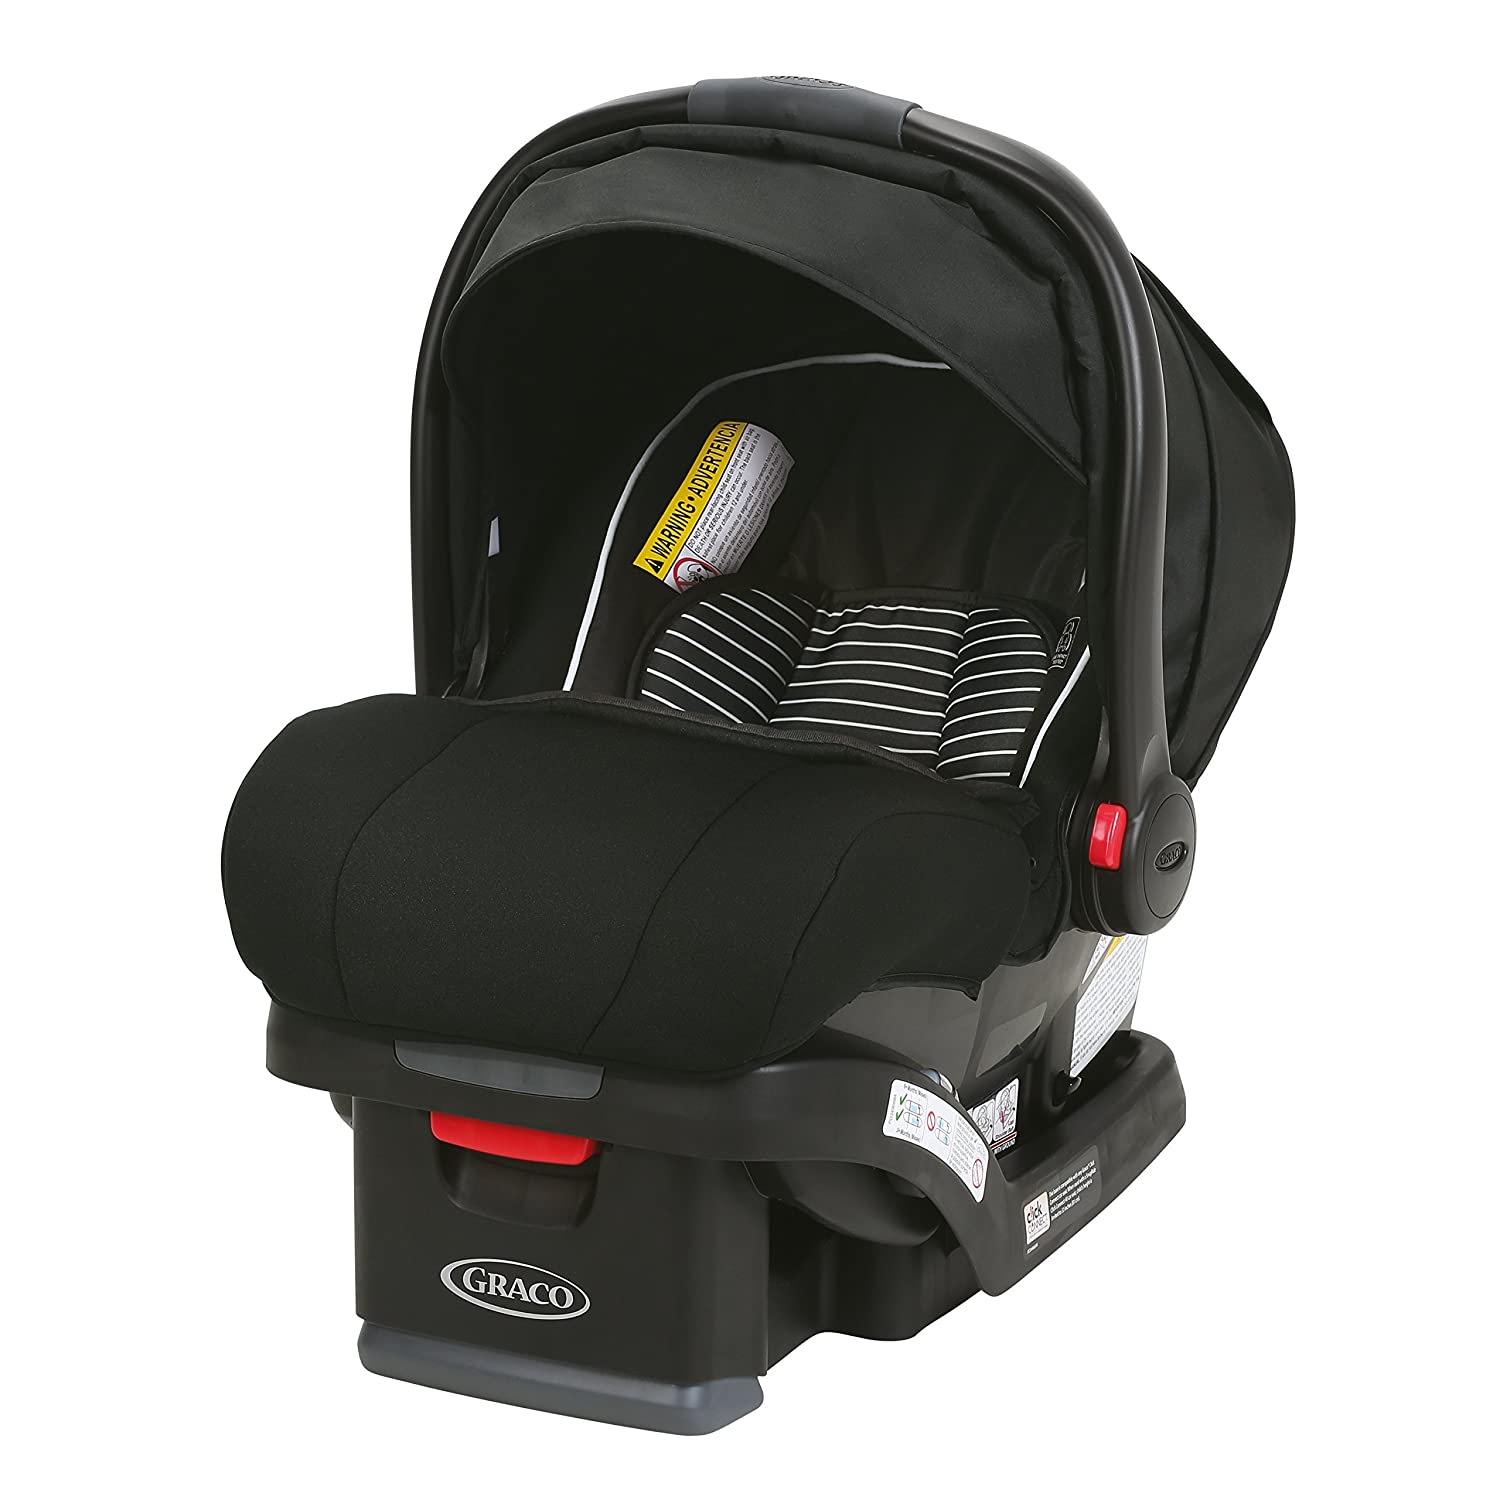  Graco SnugRide SnugLock 35 XT婴儿汽车座椅